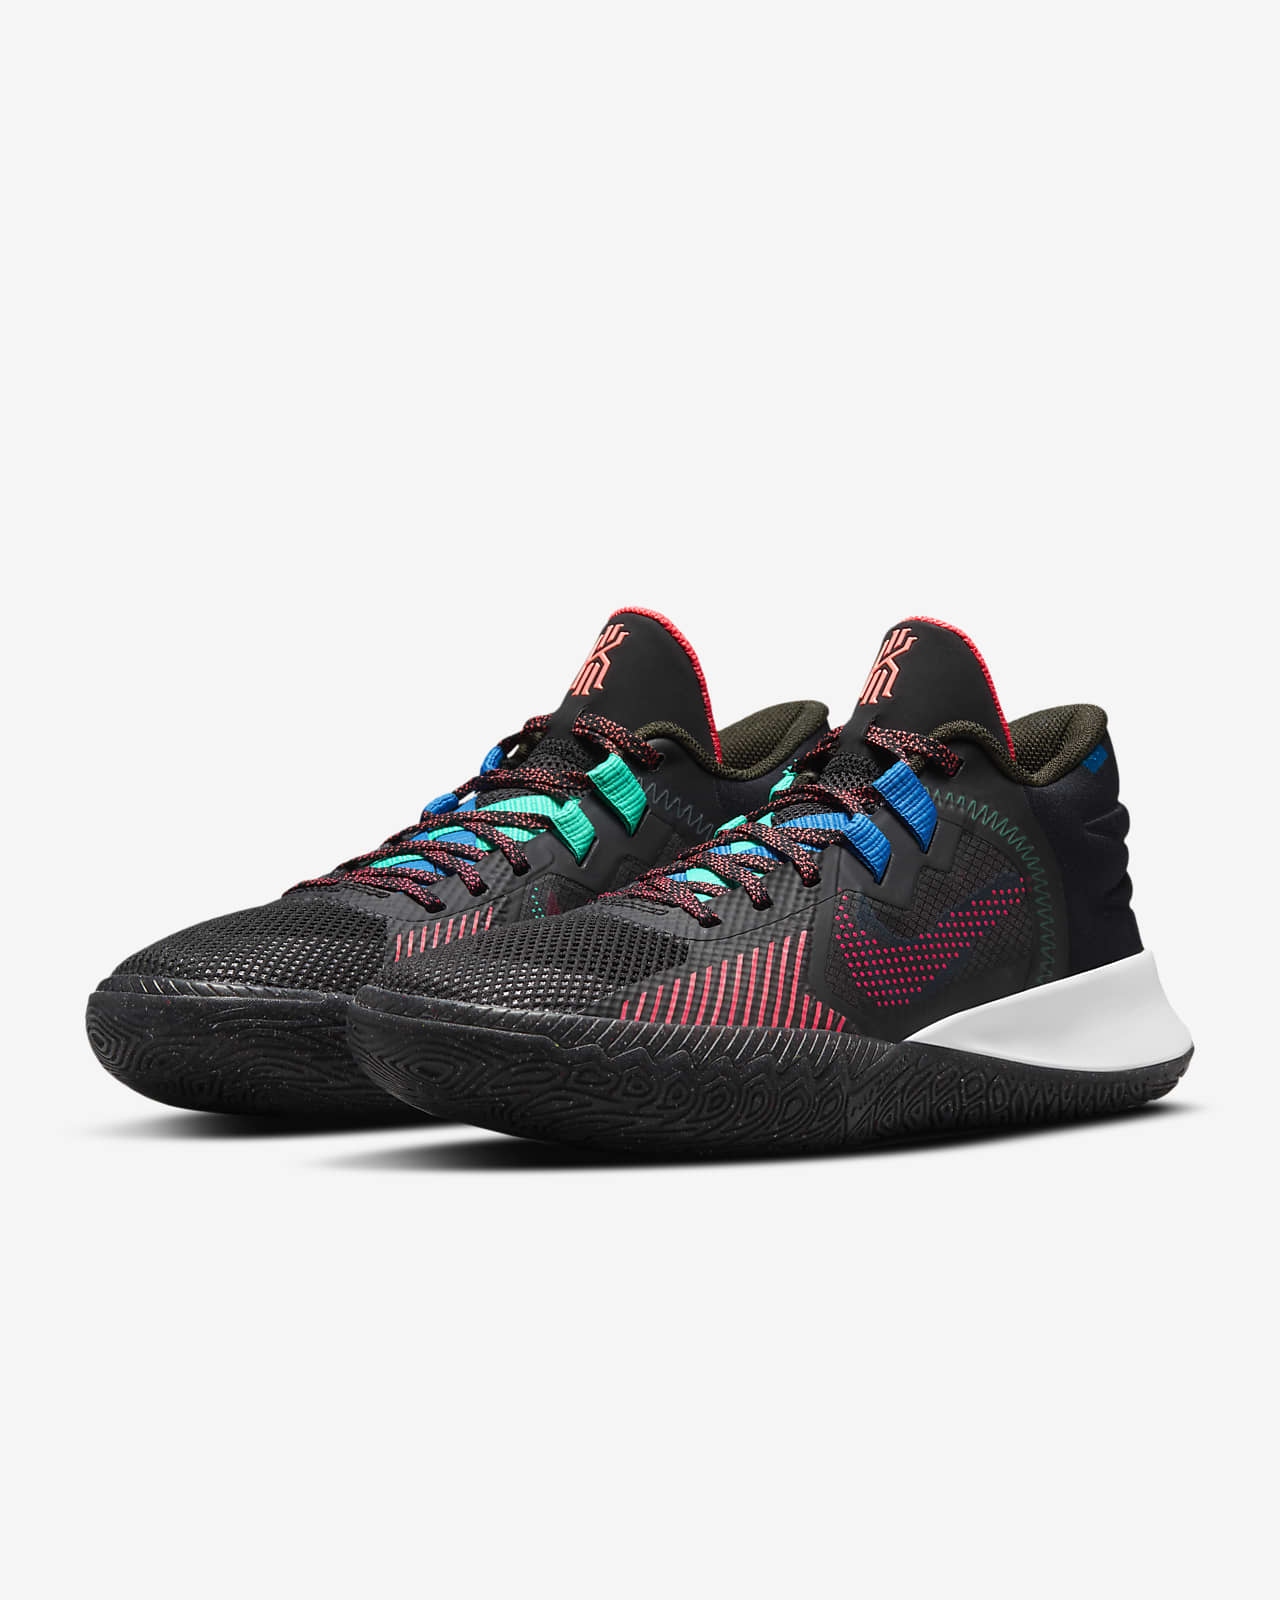 Kyrie Flytrap 5 Basketball Shoes. Nike.com